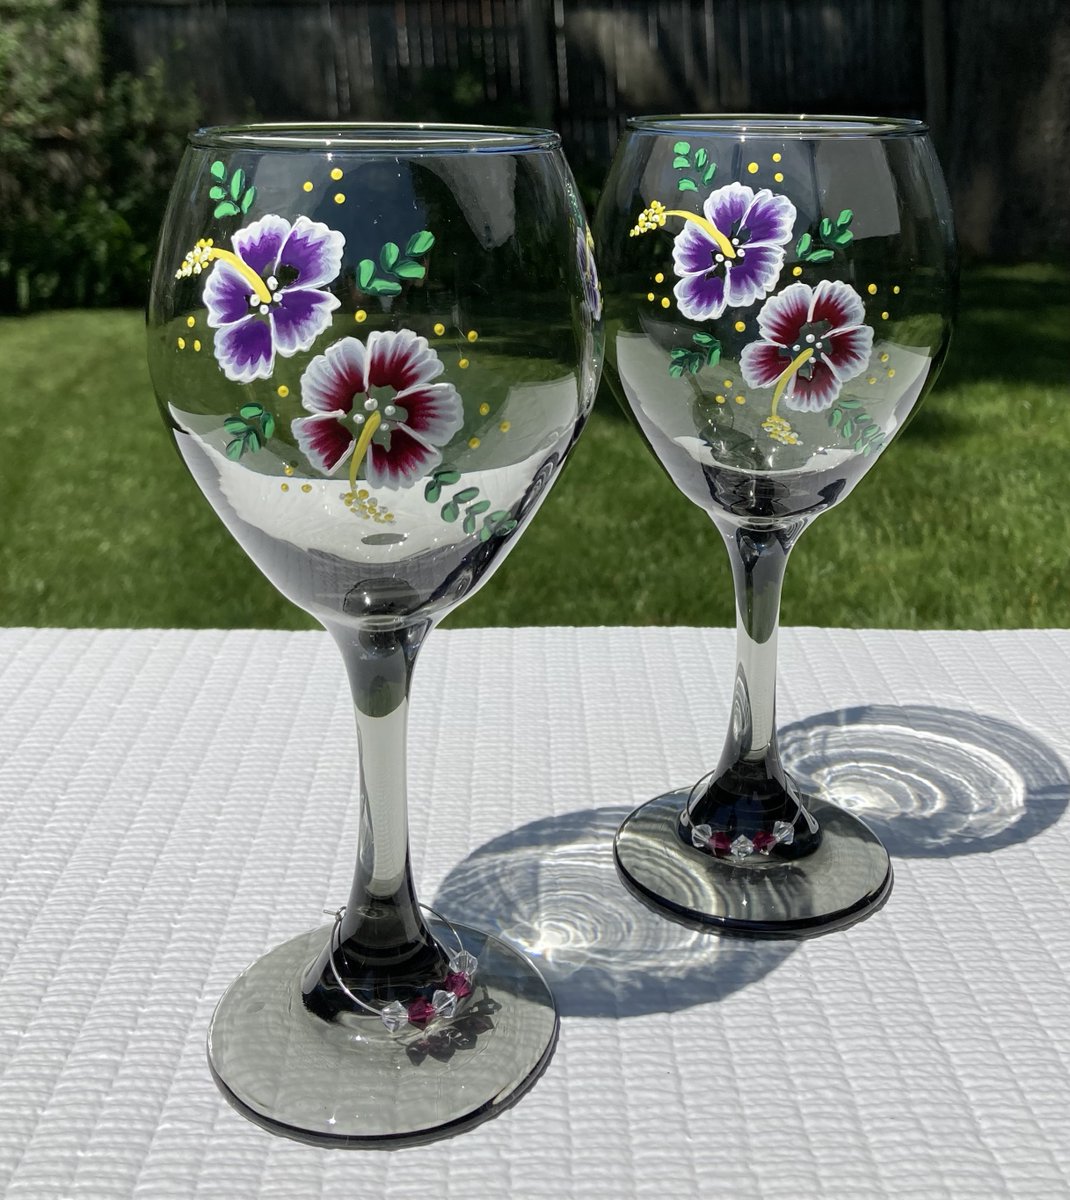 Cool gift for any occasion etsy.com/listing/122463… #giftideas #wineglasses #handpaintedglasses #SMILEtt23 #CraftBizParty #mothersdaygift #etsy #etsyshop #shopsmall